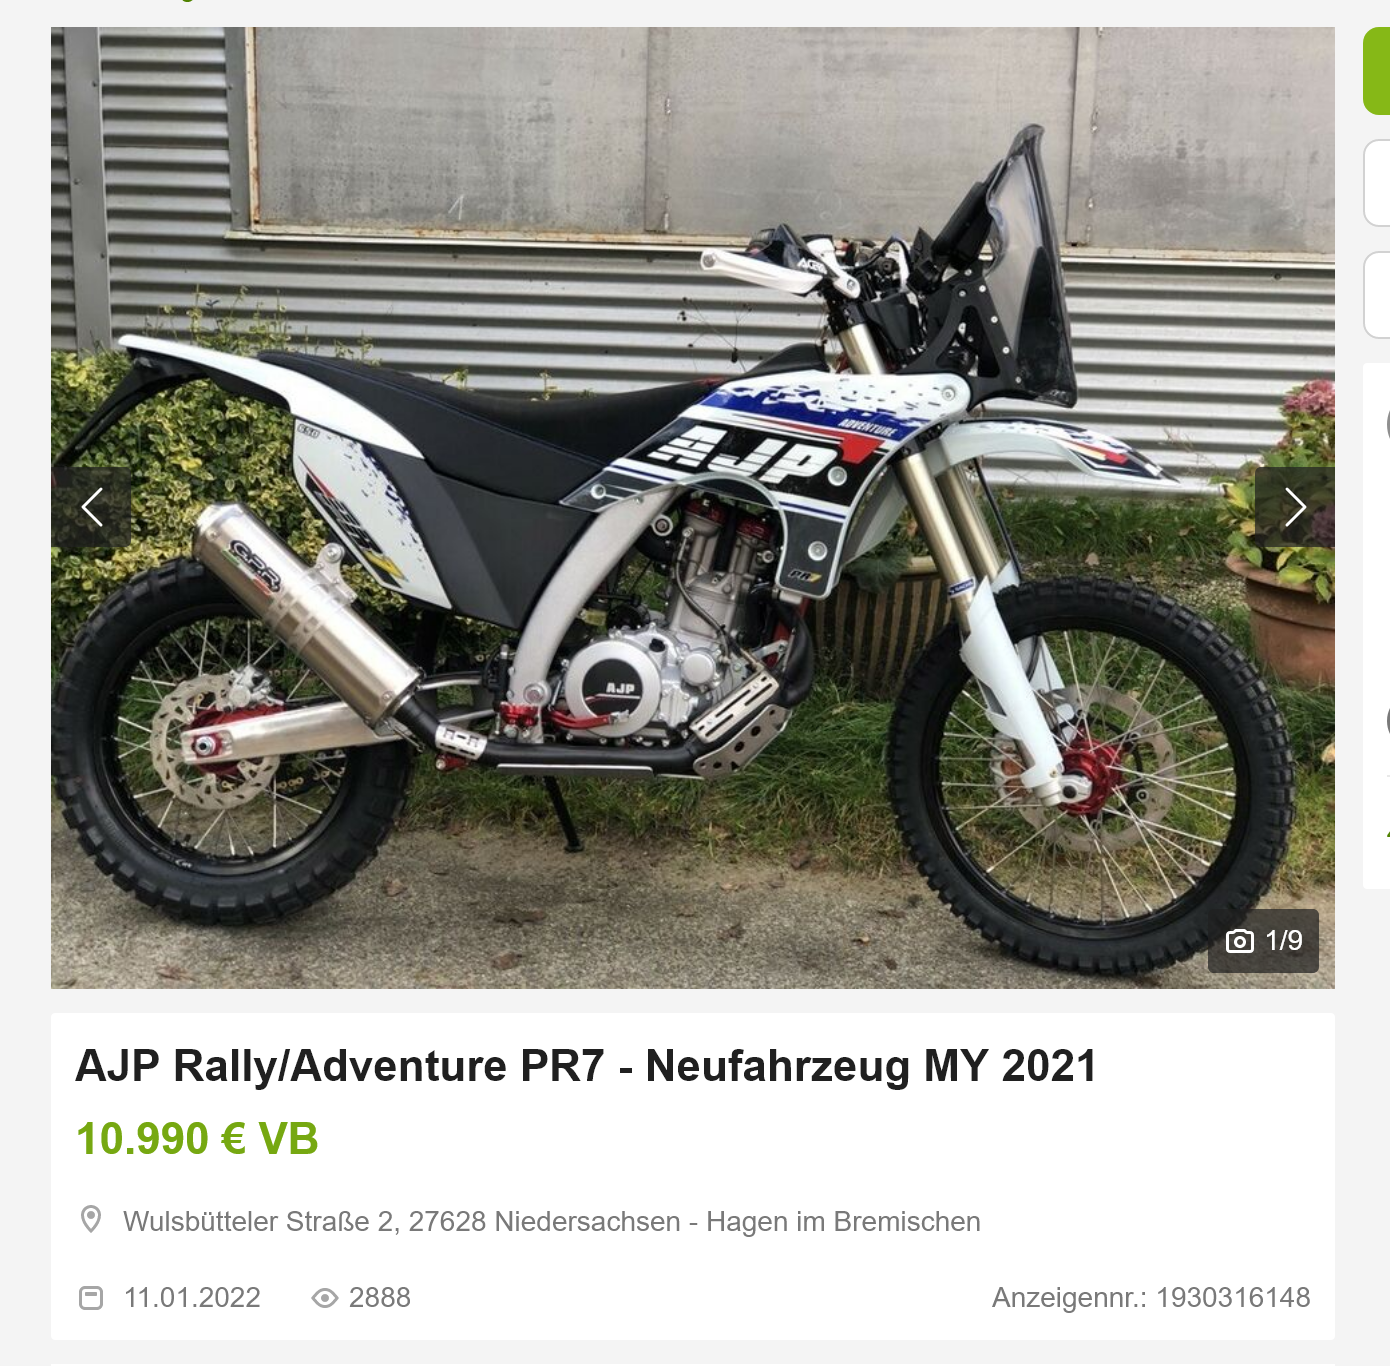 Screenshot 2022-01-29 at 11-14-42 AJP Rally Adventure PR7 - Neufahrzeug MY 2021.png